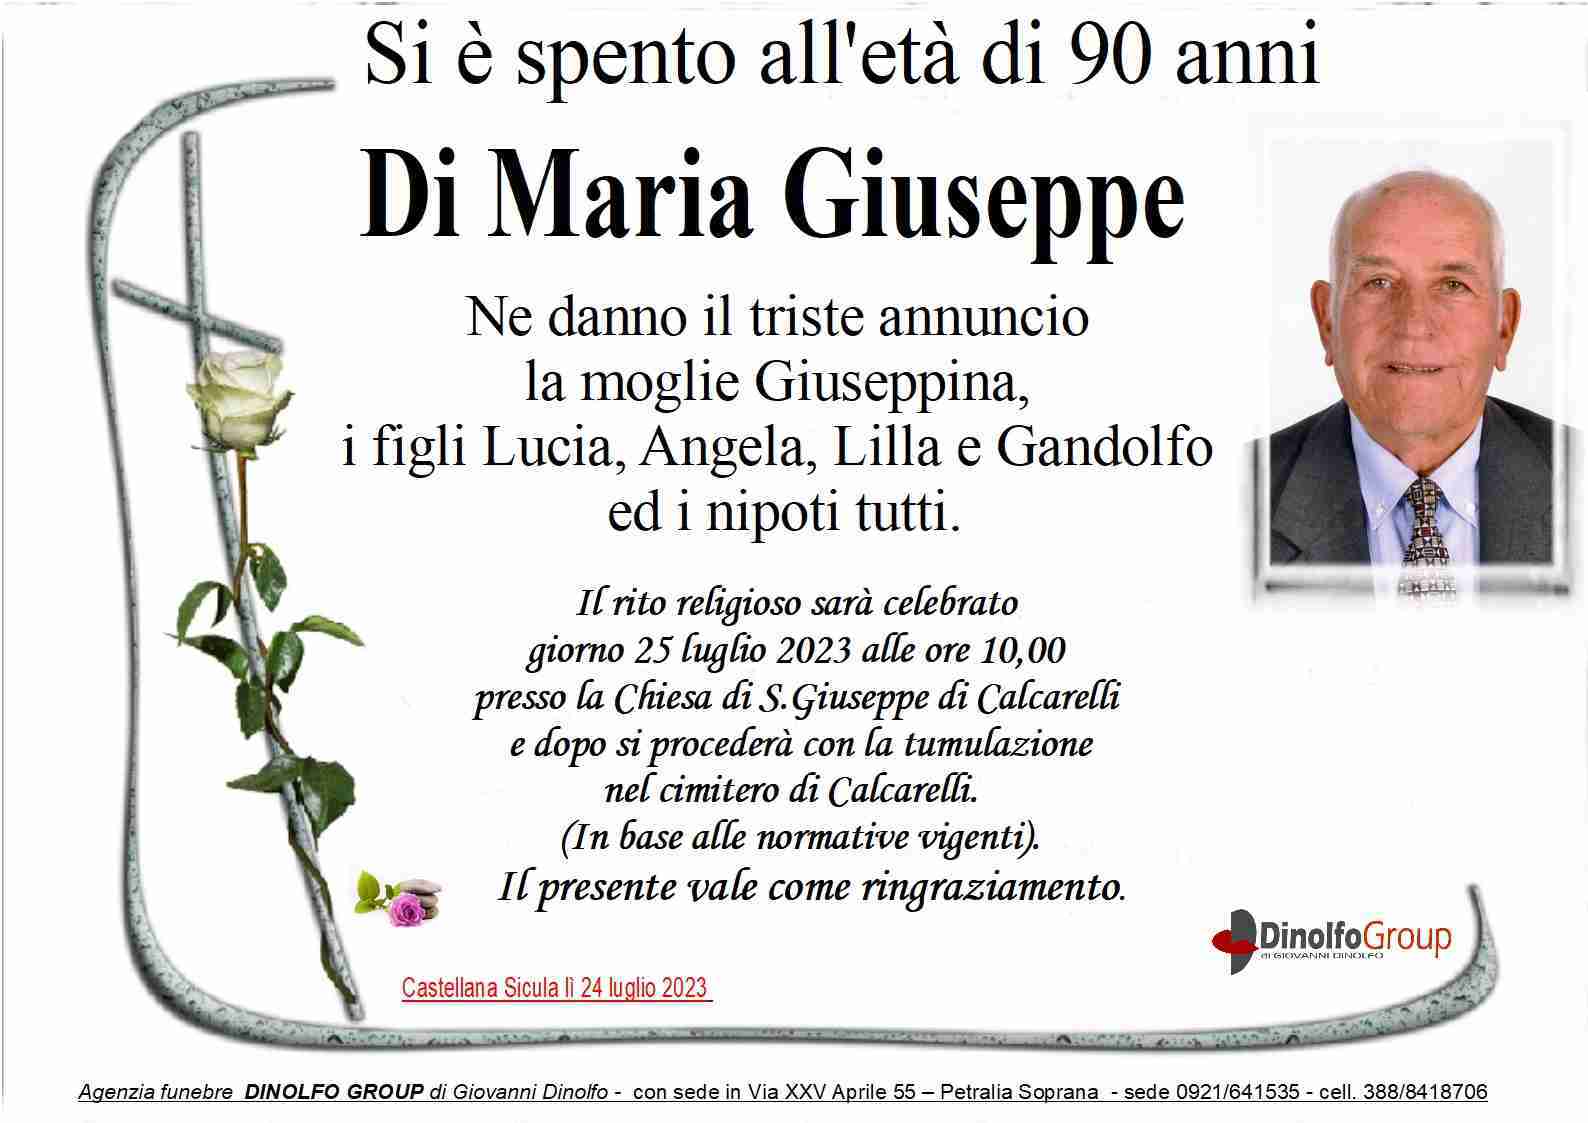 Giuseppe Di Maria